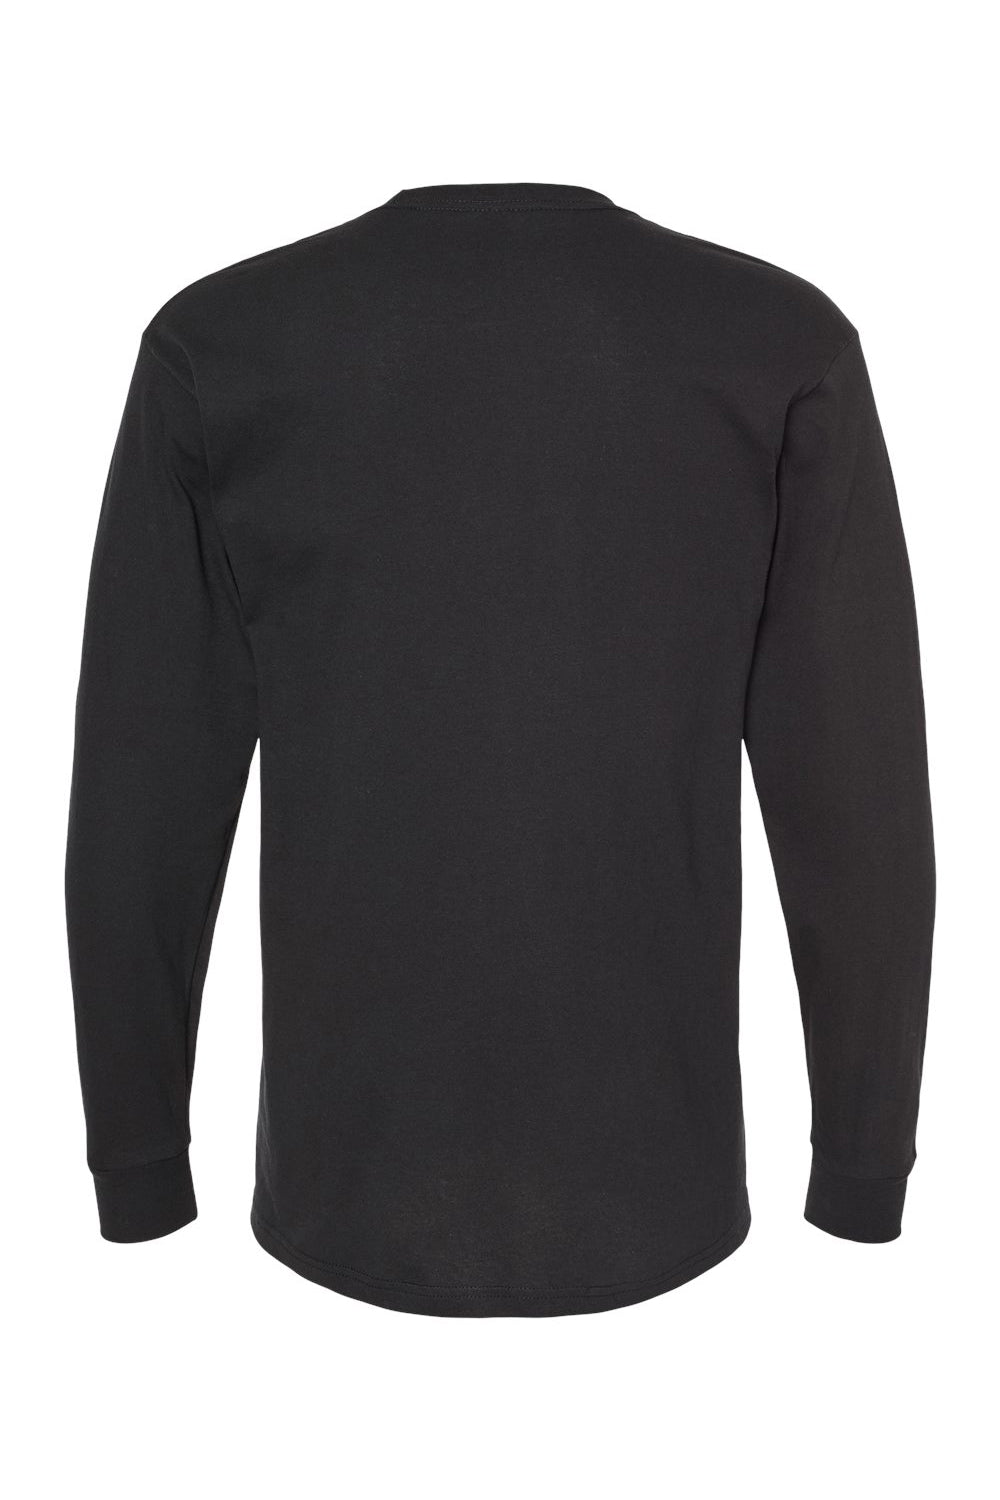 M&O 4820 Mens Gold Soft Touch Long Sleeve Crewneck T-Shirt Black Flat Back